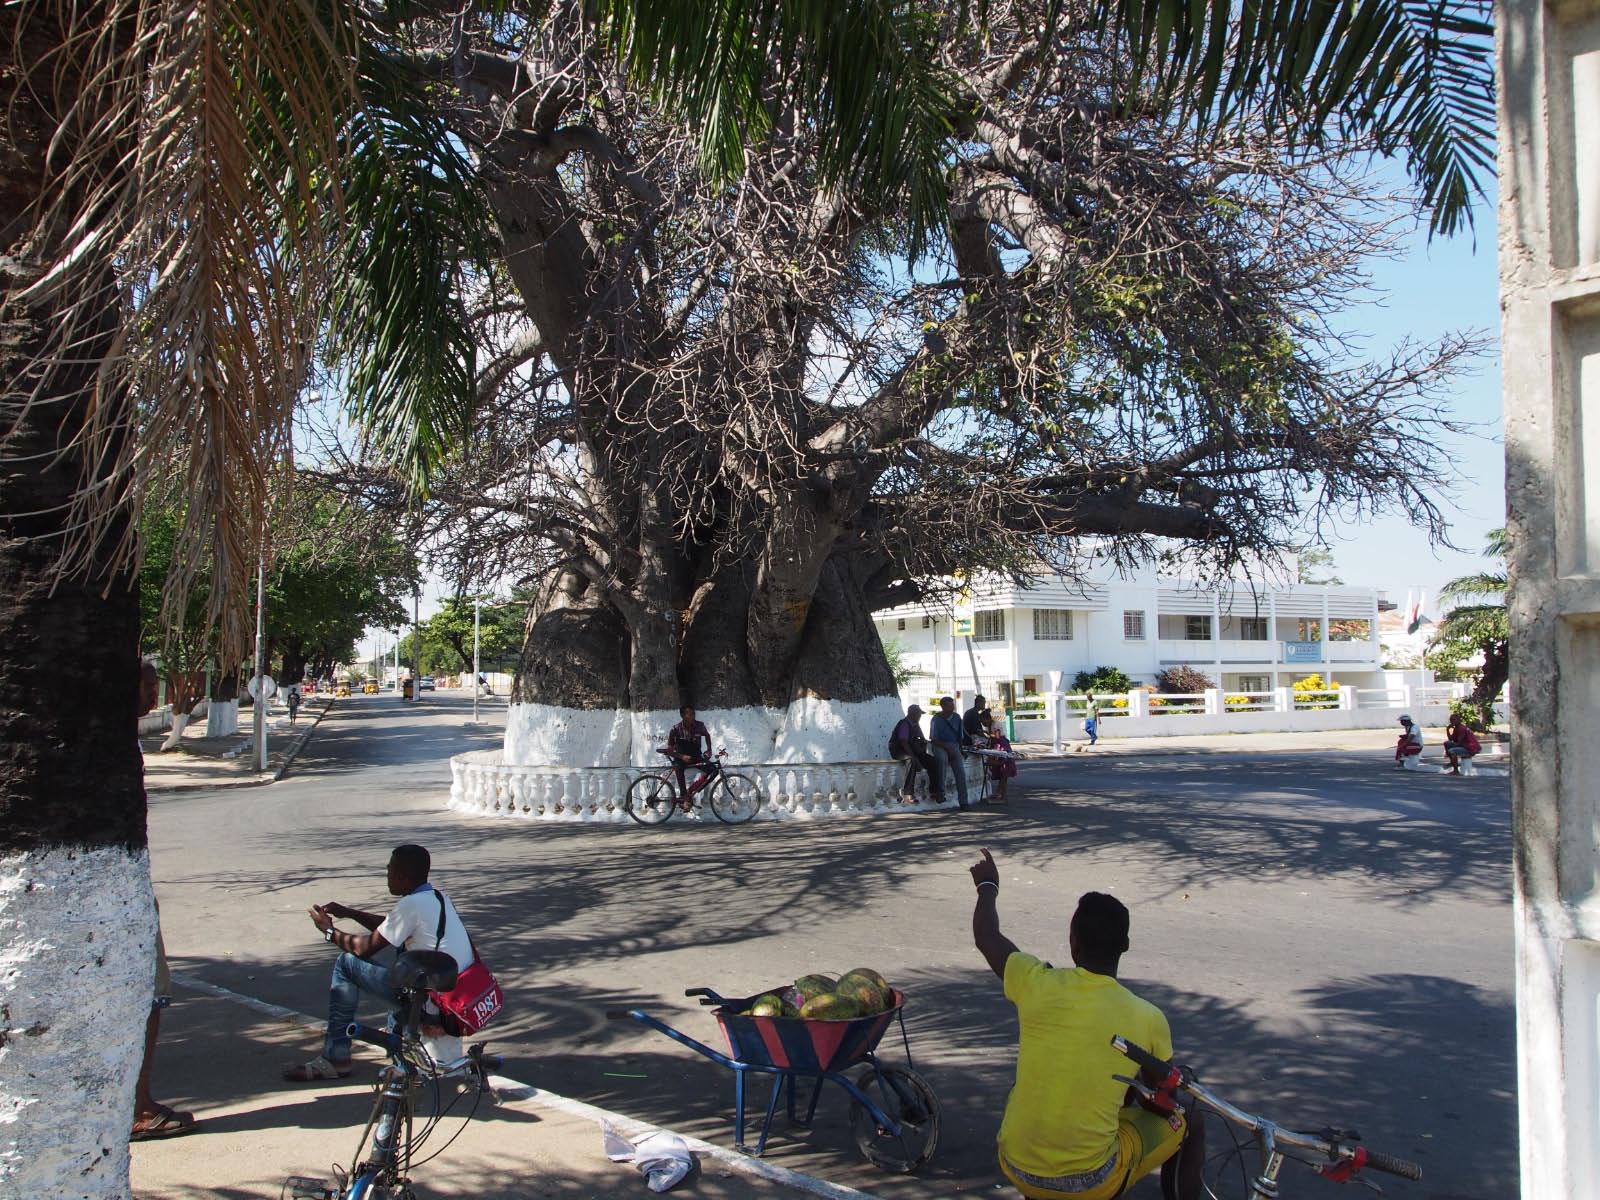 Baobab de Majunga